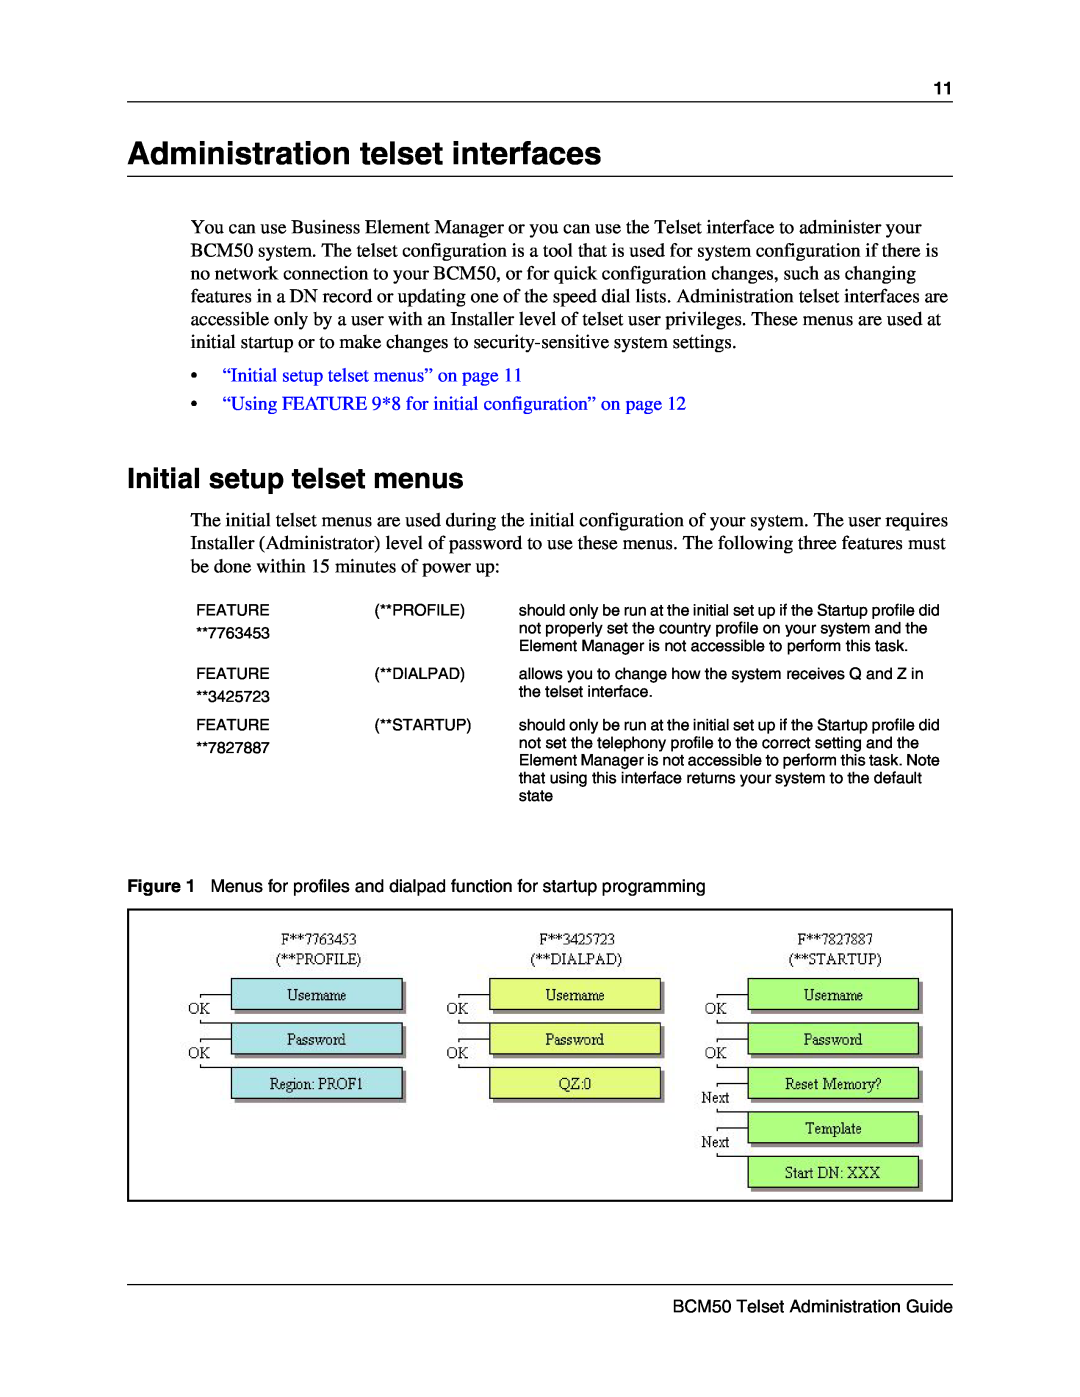 Nortel Networks BCM50 2.0 manual Administration telset interfaces, Initial setup telset menus 